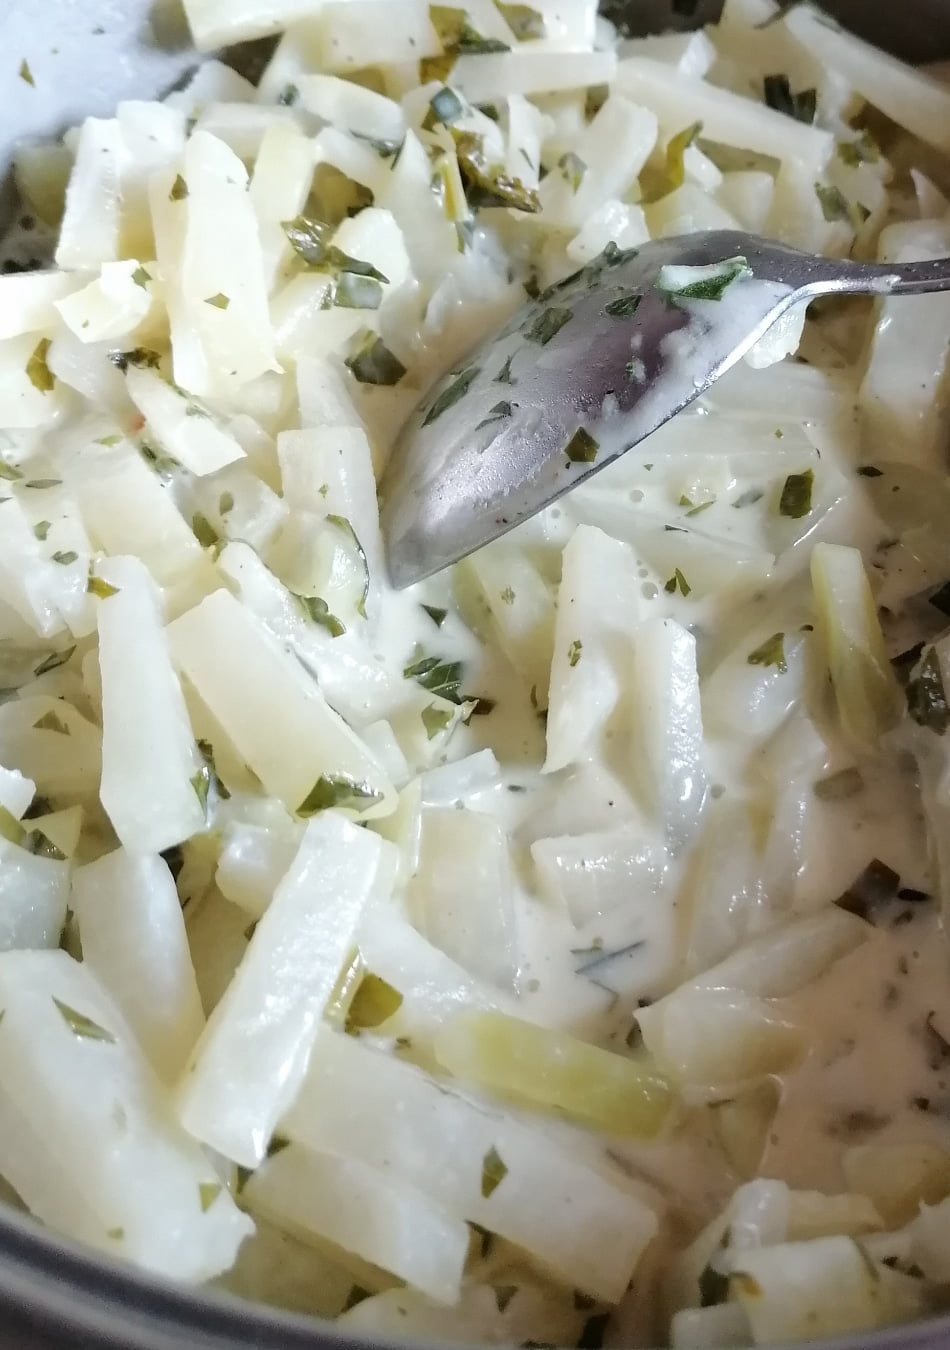 Cabbage turnip in creamy sauce